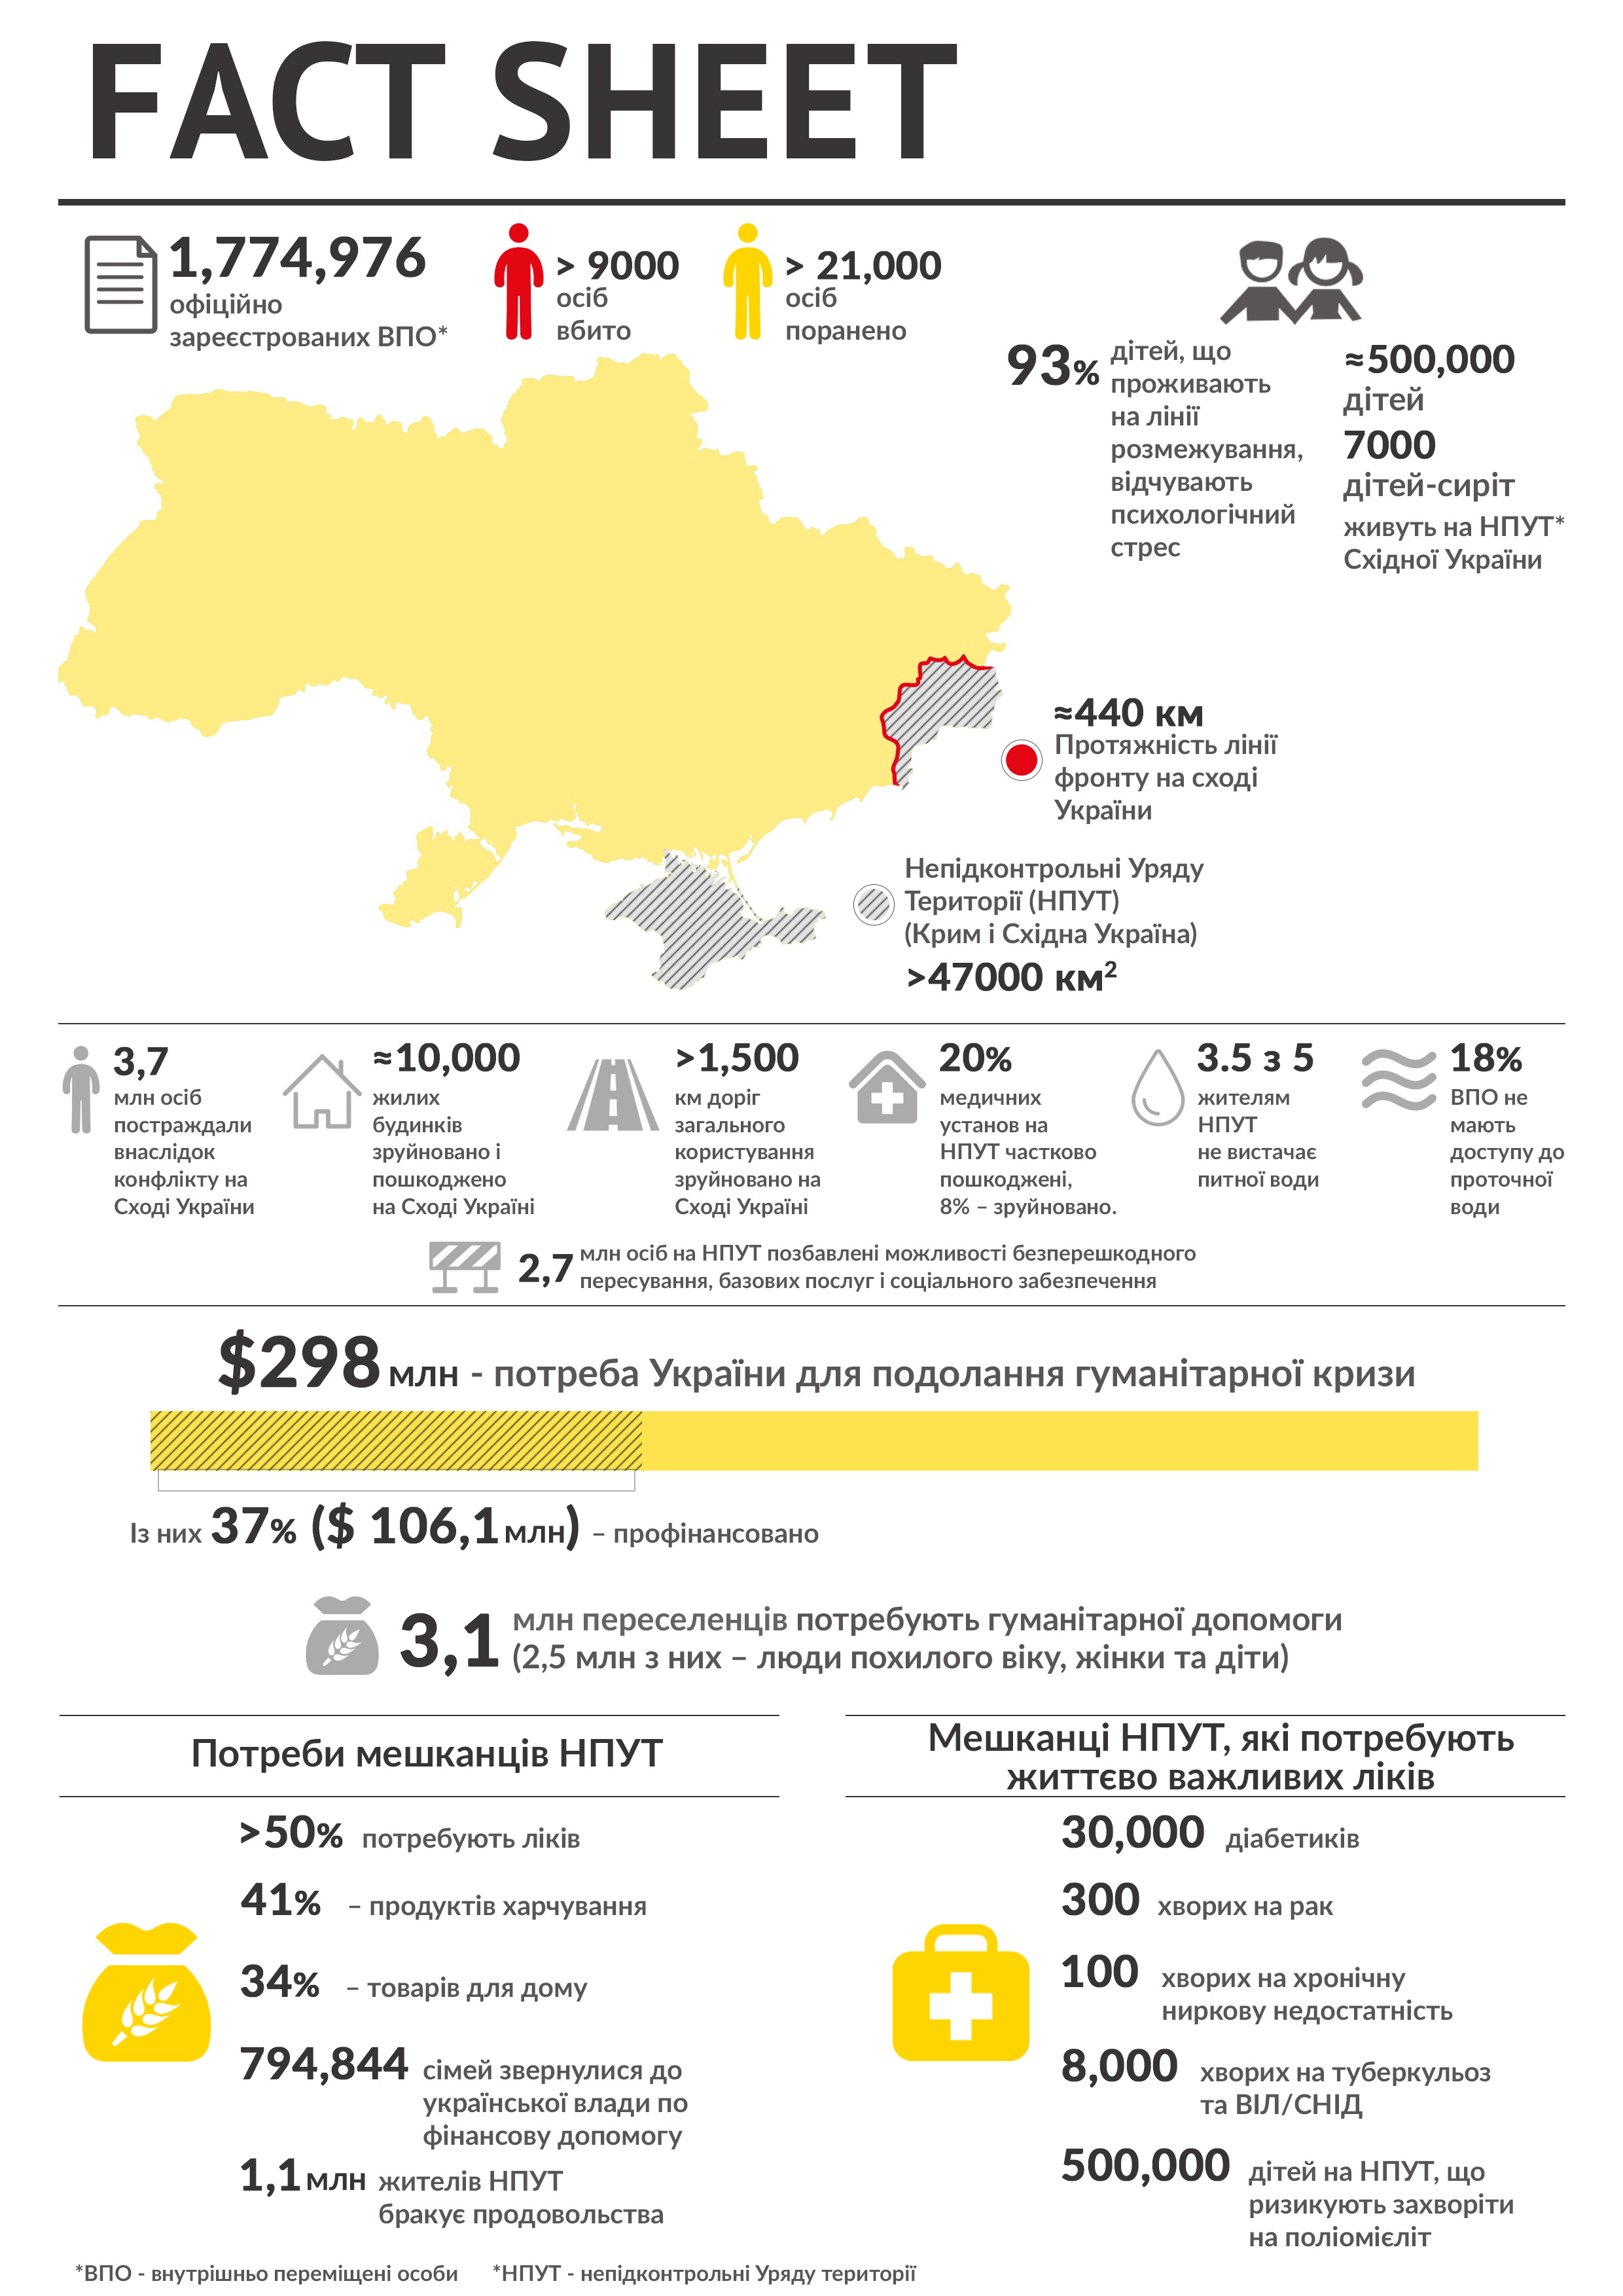 карта і статистика ВПО україни